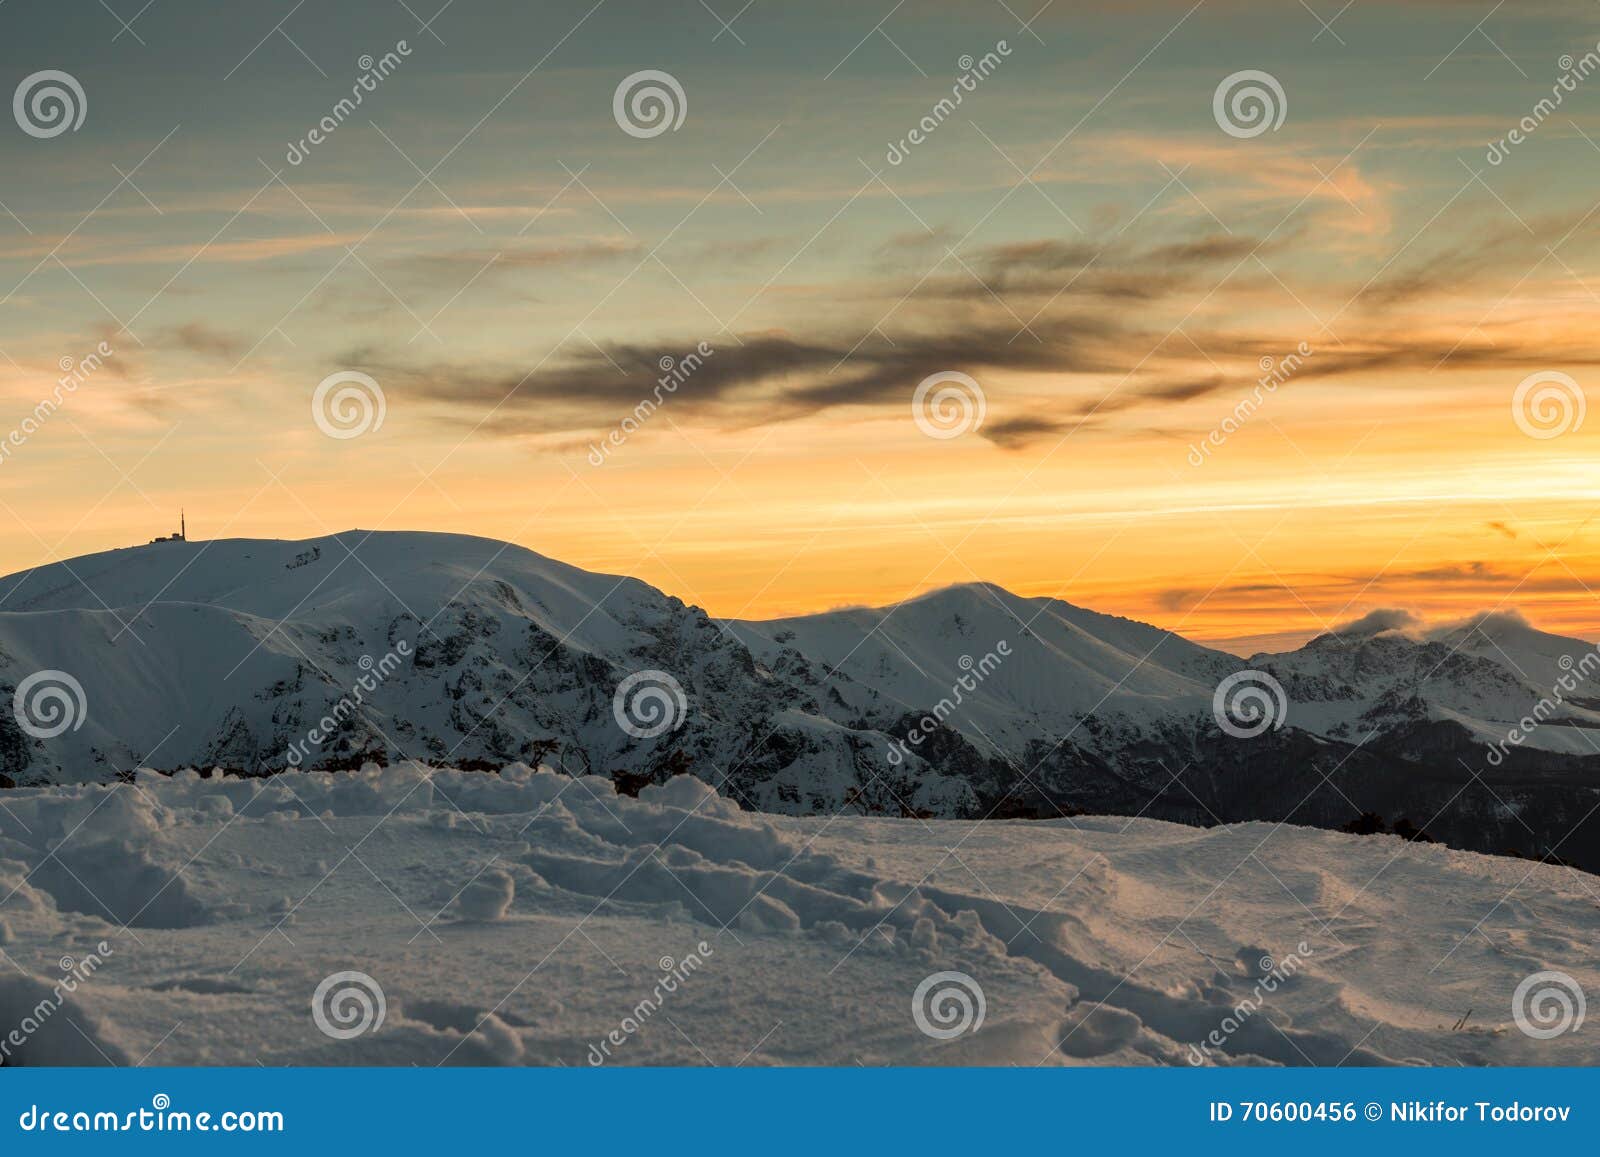 balkan mountains sunset